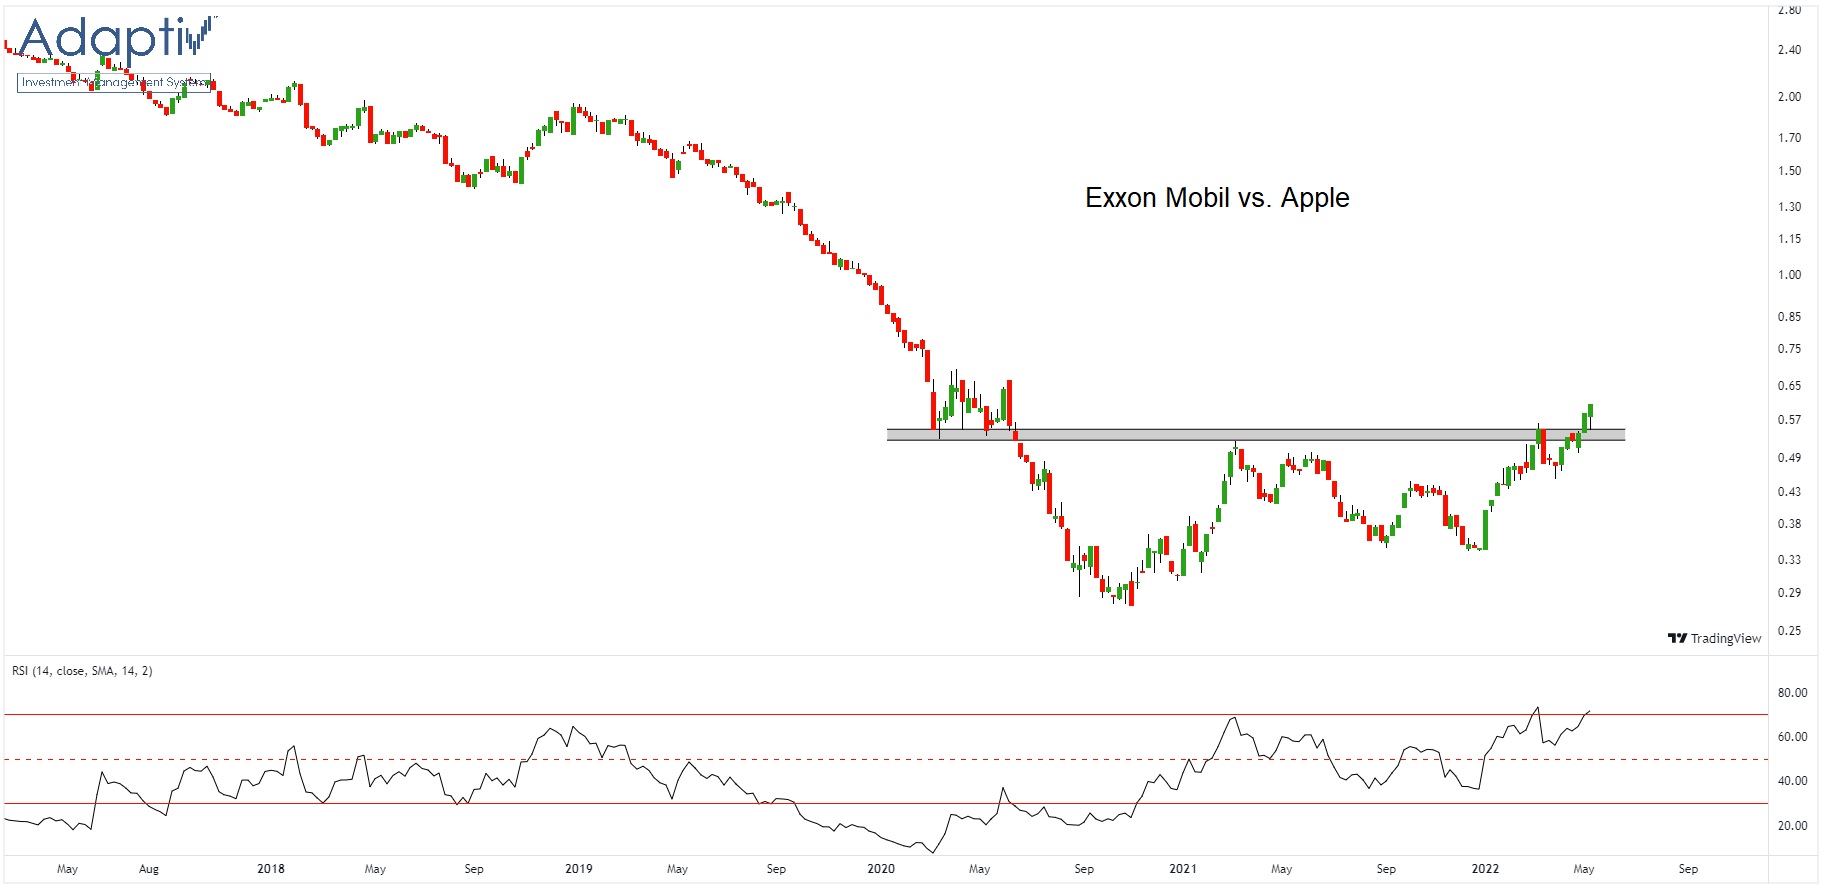 ExxonMobil vs. Apple